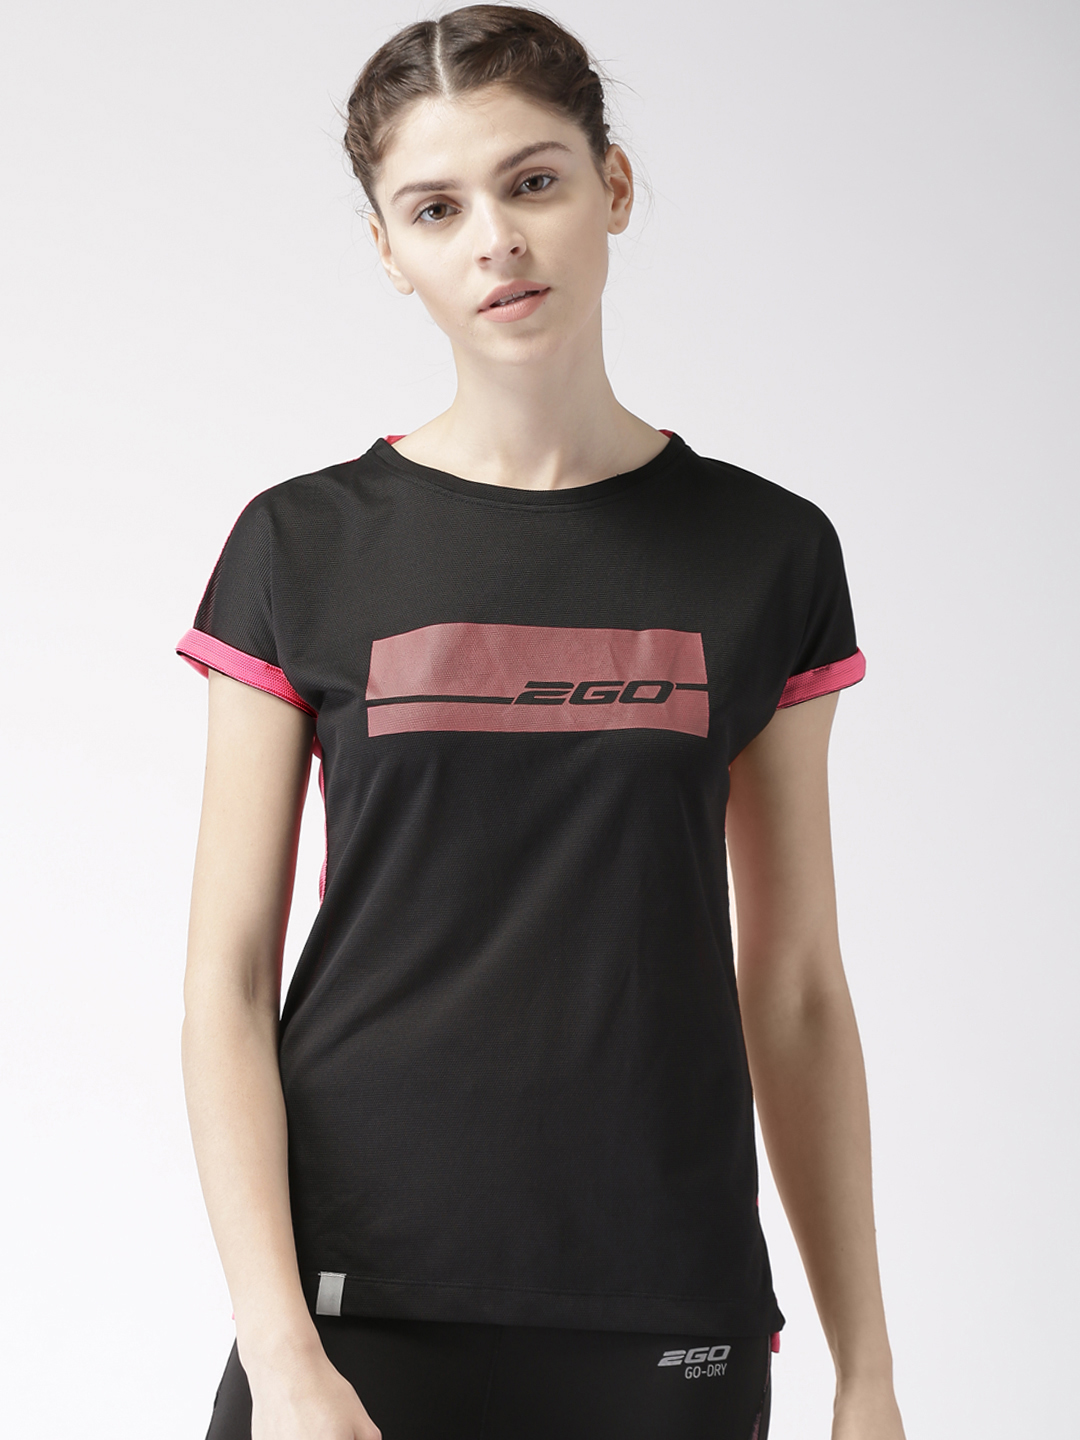 2GO Women Black & Neon Pink Printed Round Neck T-shirt Price in India